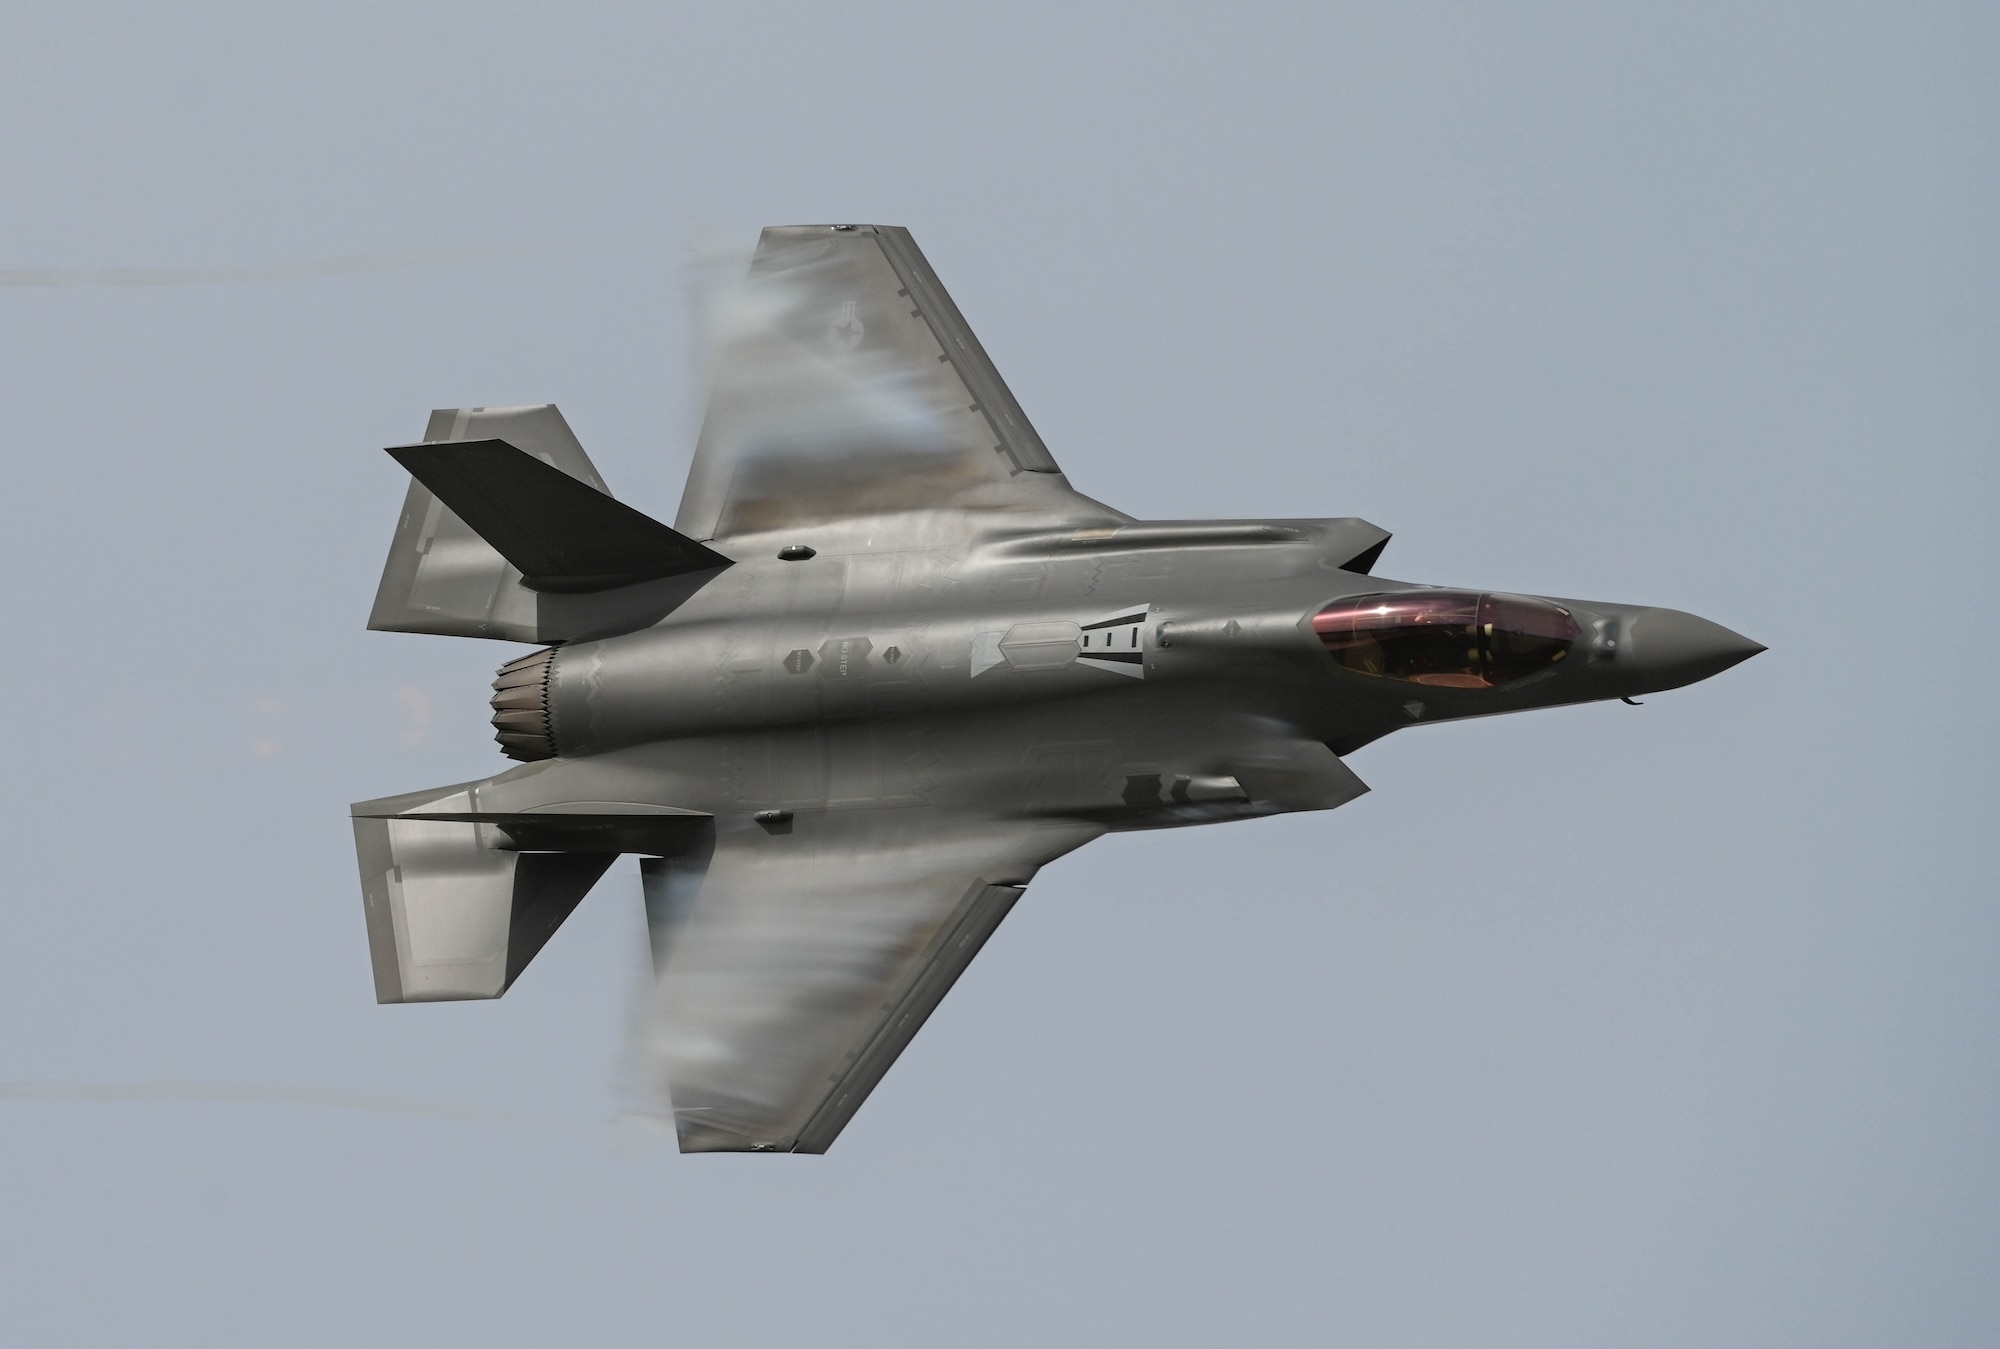 An F-35 Lightning II flying in air.